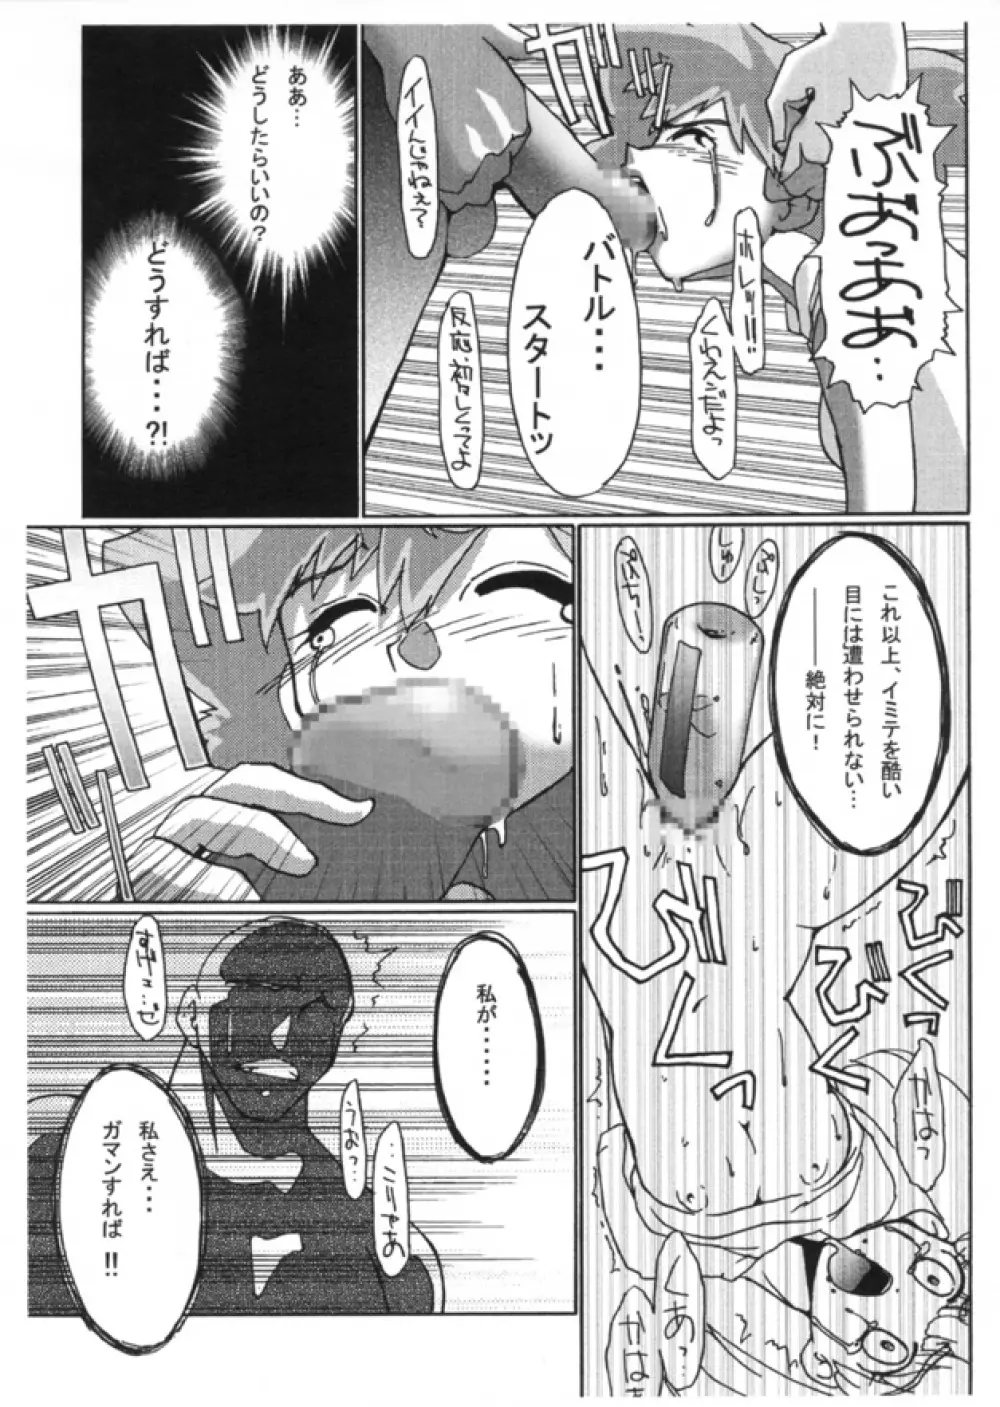 KASUMIX XPLOSION Kasumi Comic part5 - page44